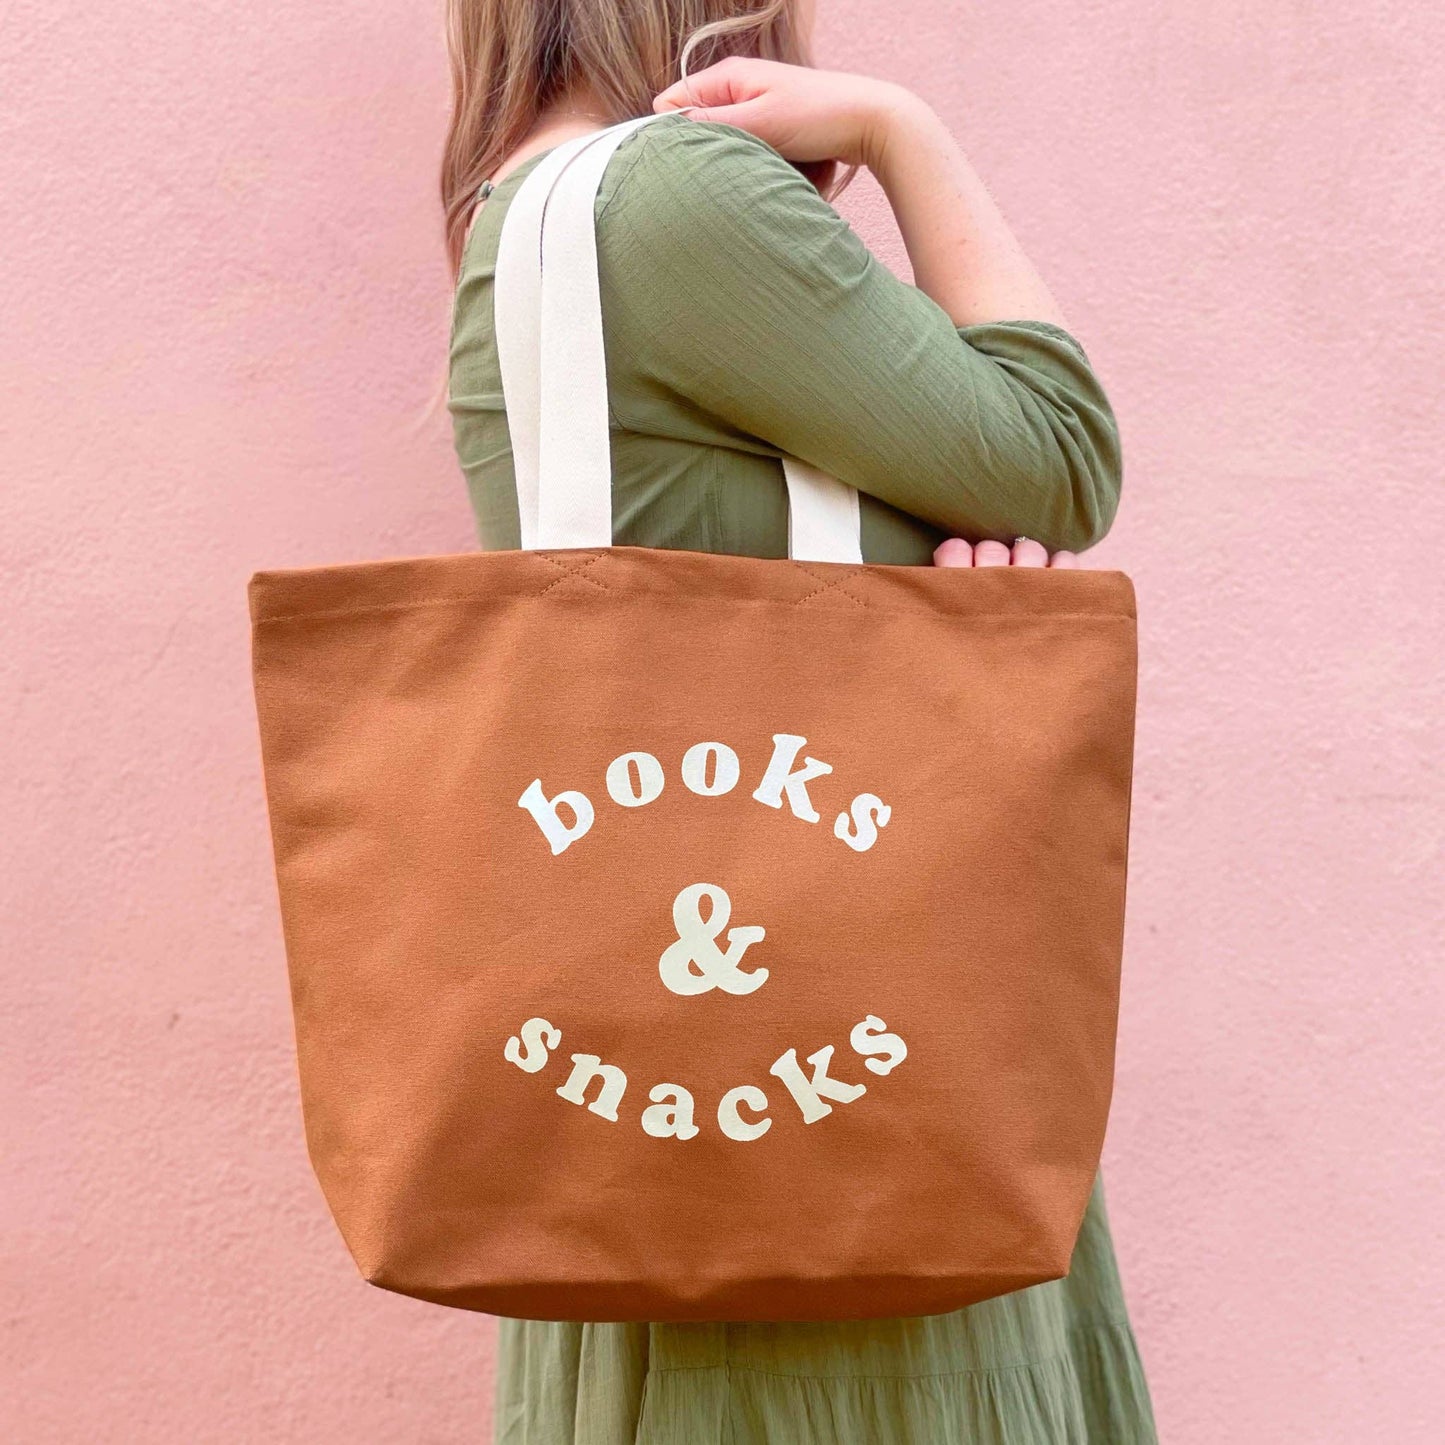 Alphabet Bags - Books & Snacks - Tan Canvas Tote Bag